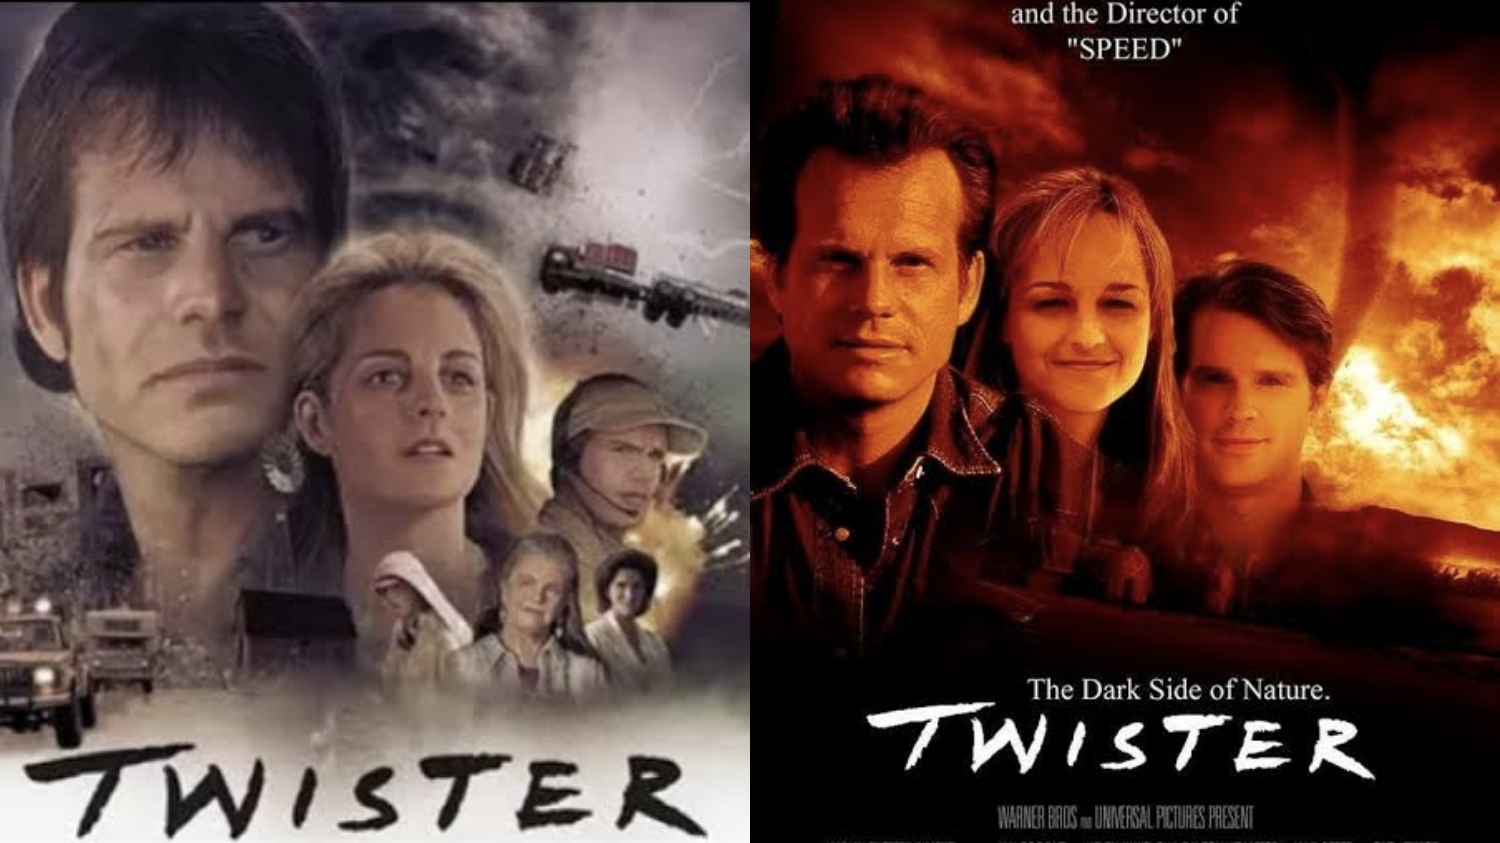 Twisters, Film Tentang Tornado dan Segala yang Wajib Kamu Ketahui